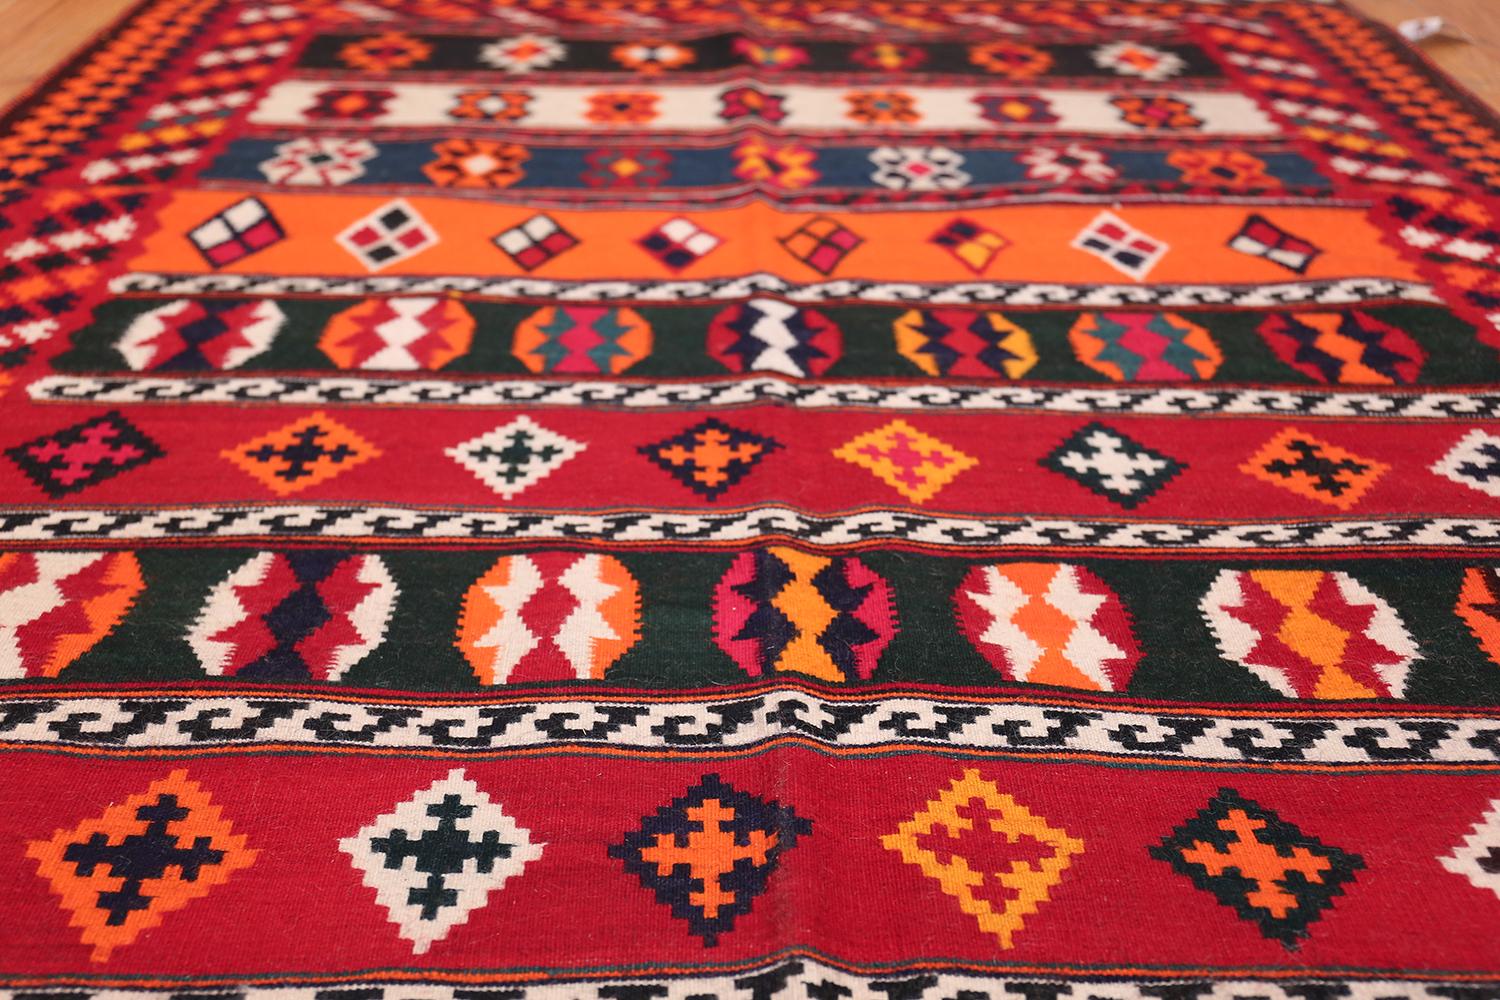 Hand-Woven Vintage Persian Ghashgai Rug. Size: 5 ft x 9 ft (1.52 m x 2.74 m)